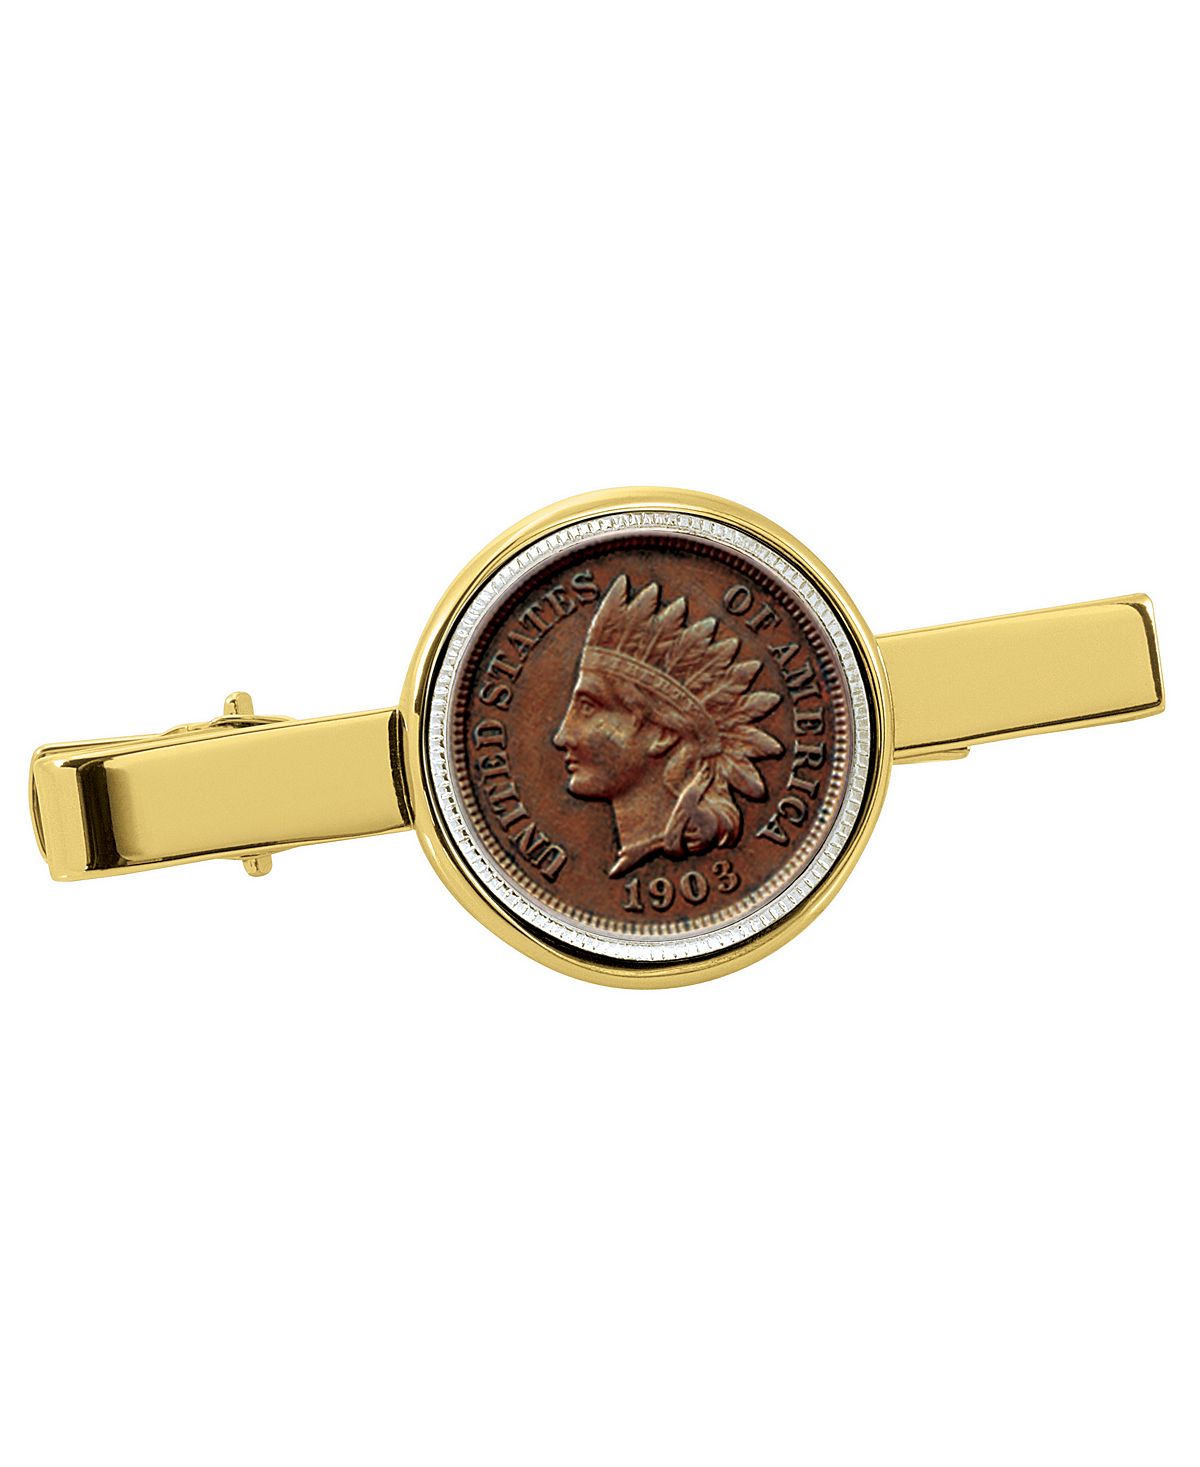 Зажим для галстука в виде монеты «Индийский пенни» American Coin Treasures 2021 40mm gold plated ethereum eth gold metal coin cryptocurrency coin for collection